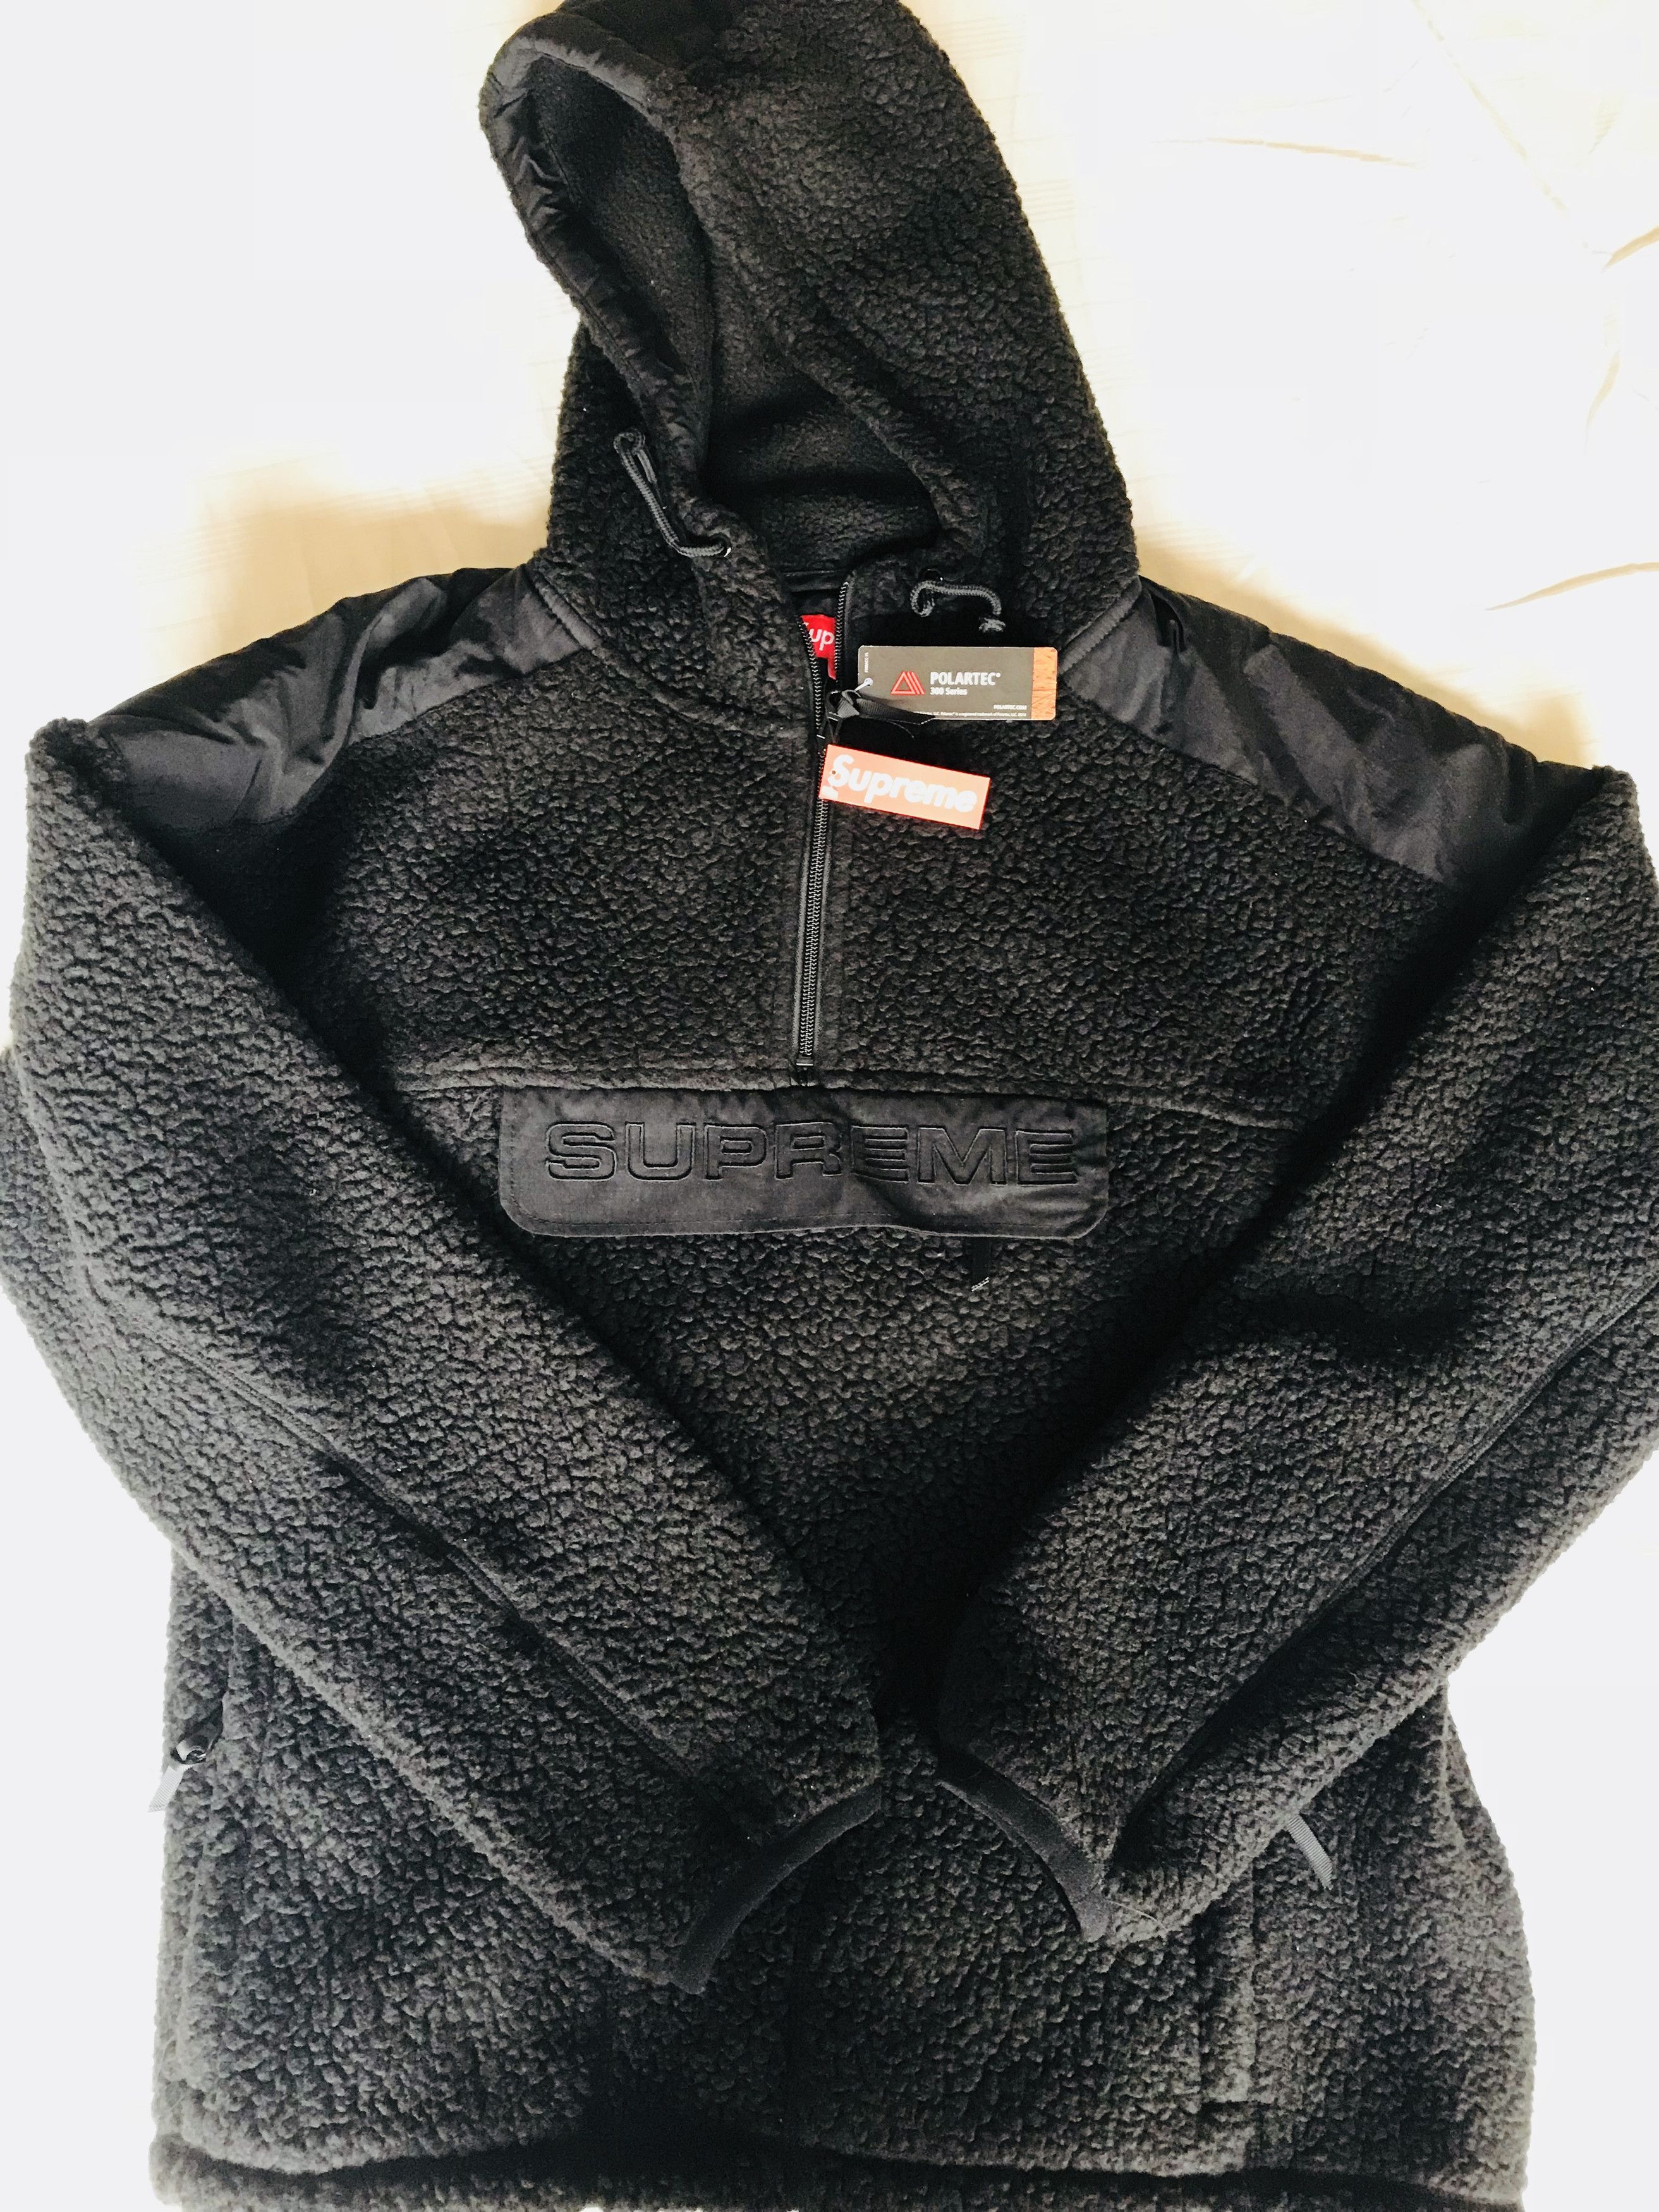 Supreme Polartec Hooded Half Zip Pullover Black | Grailed